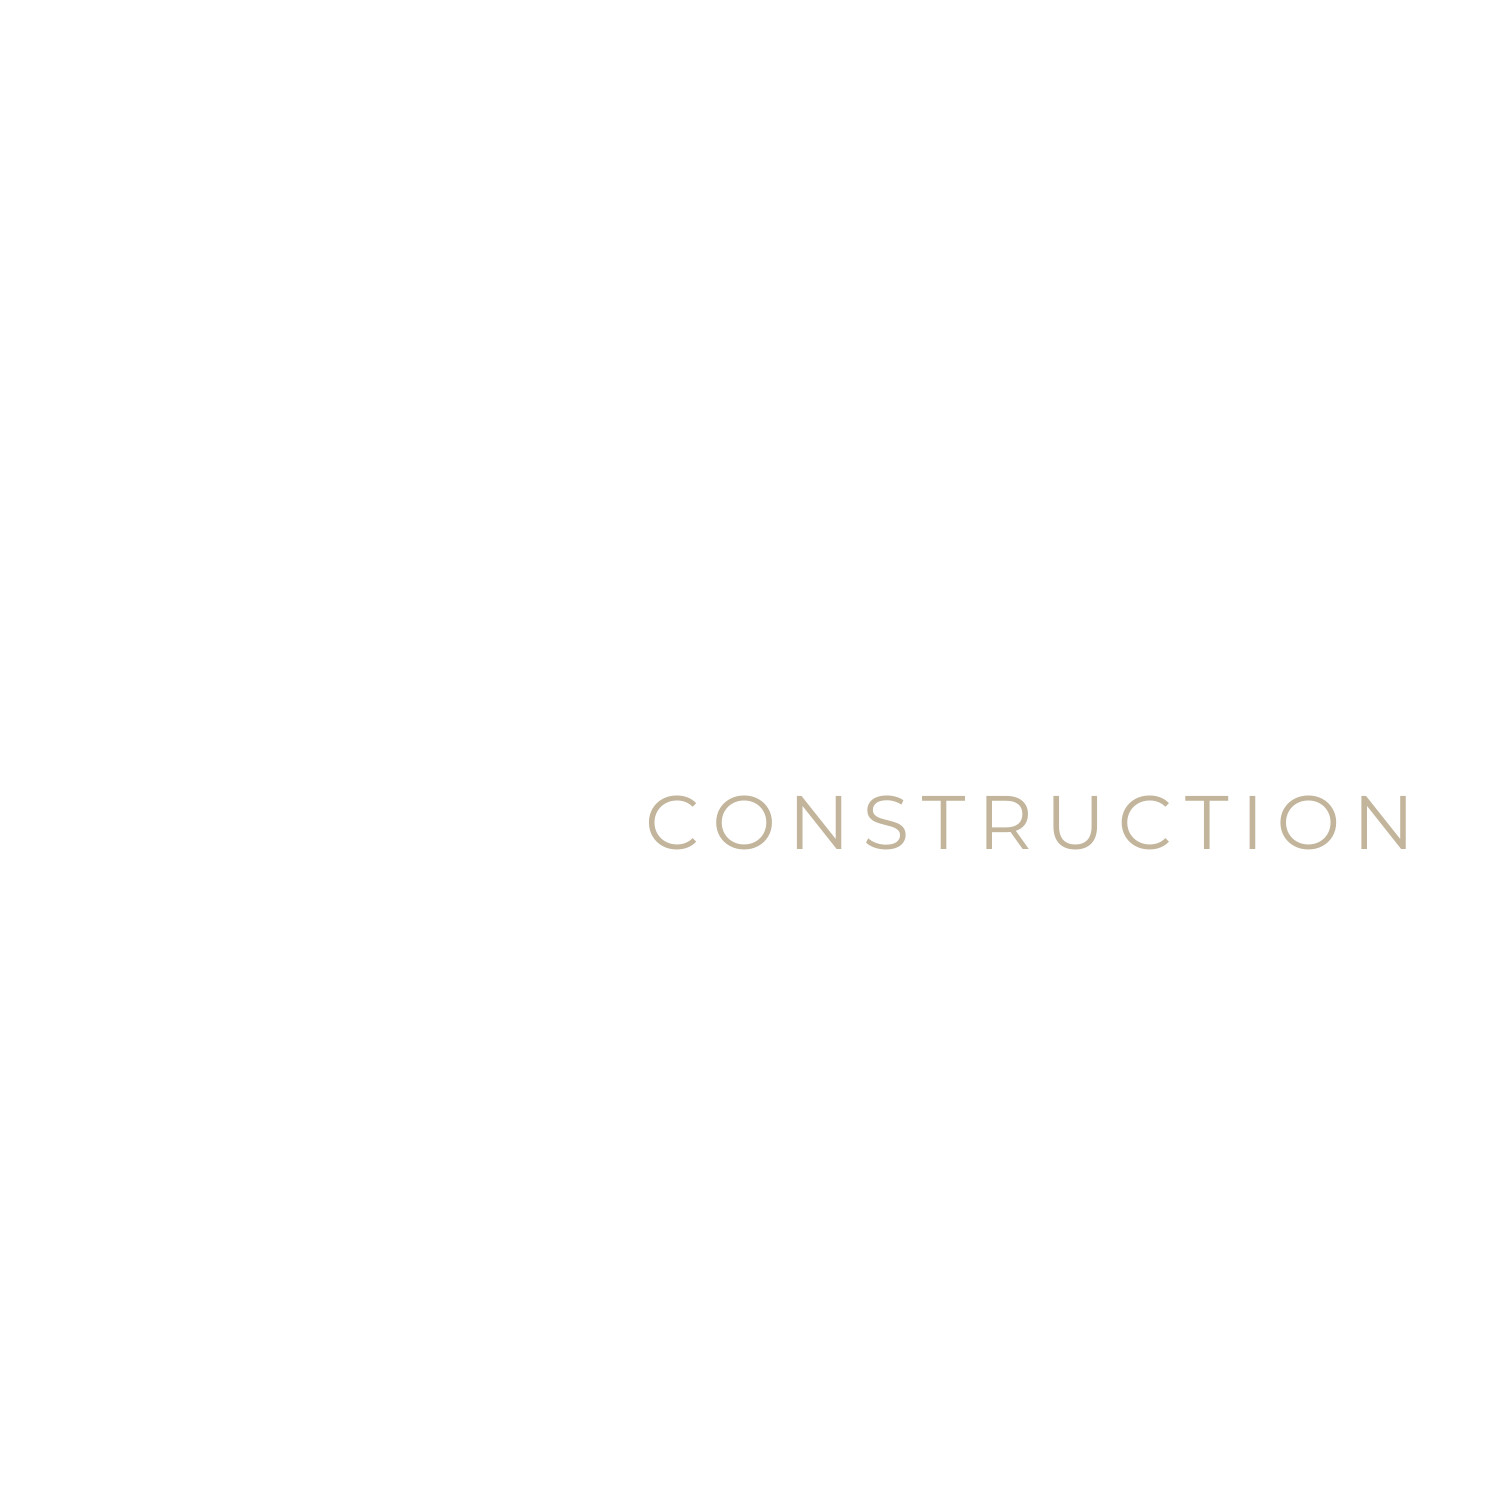 GADA Construction